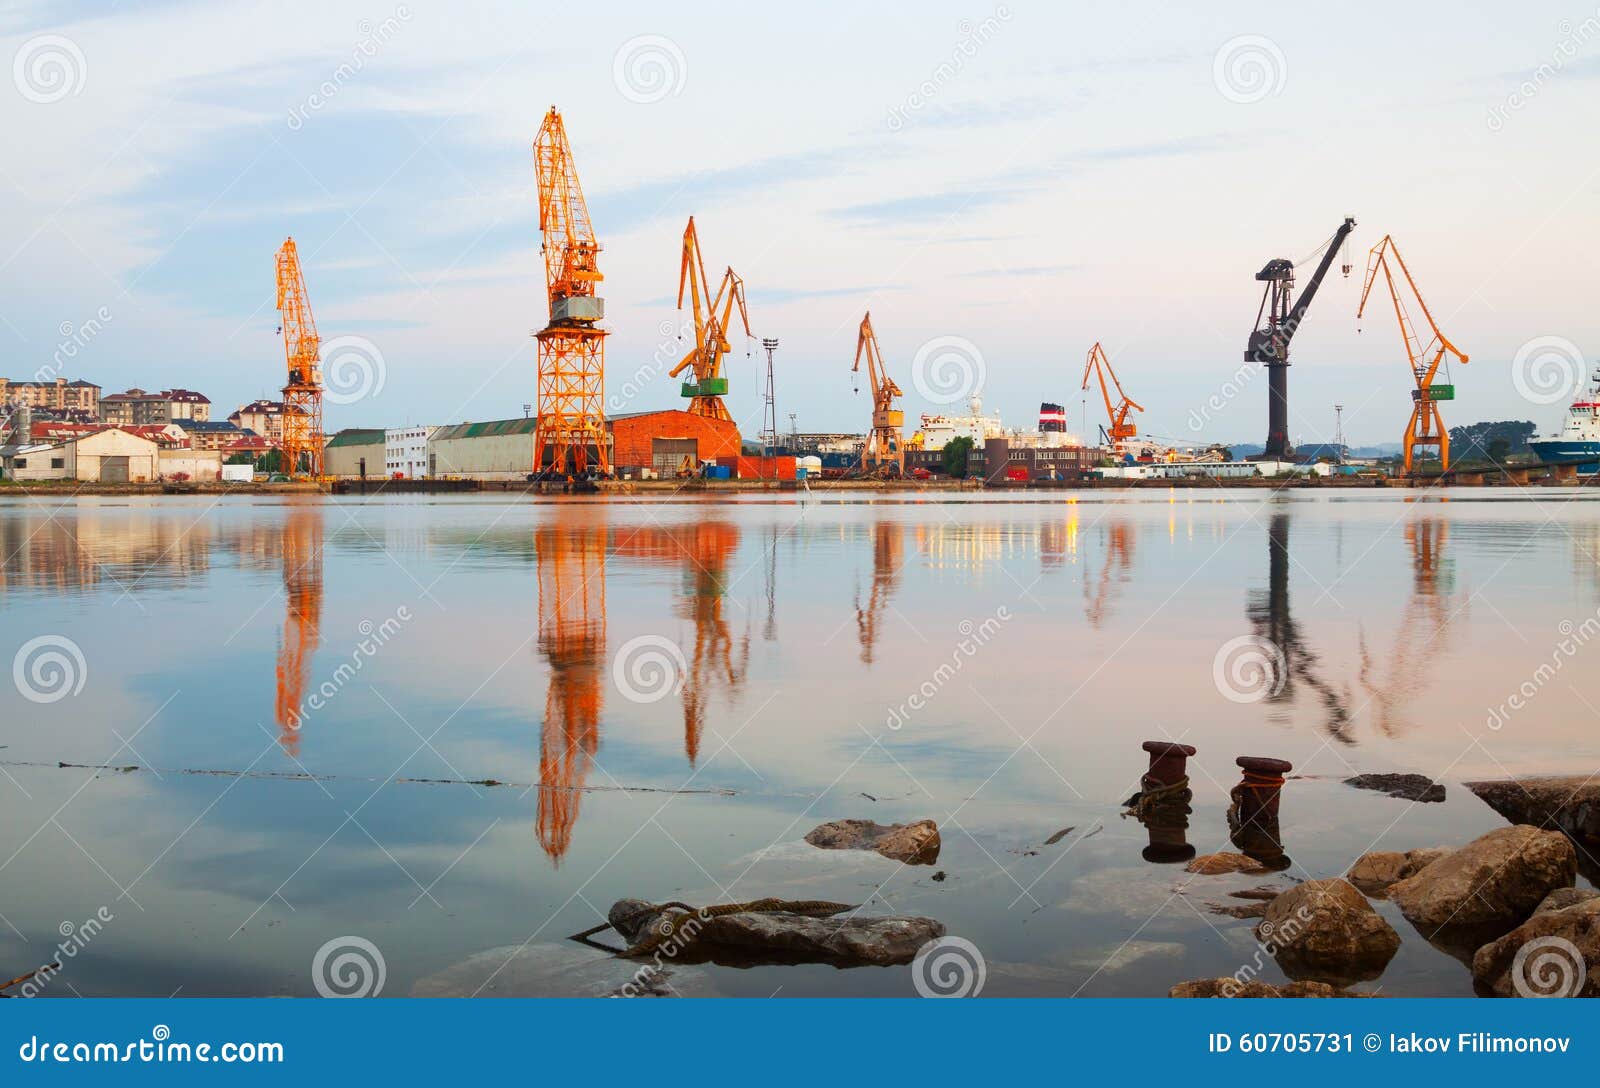 morning view of cranes in cargo seaport. santander, spain